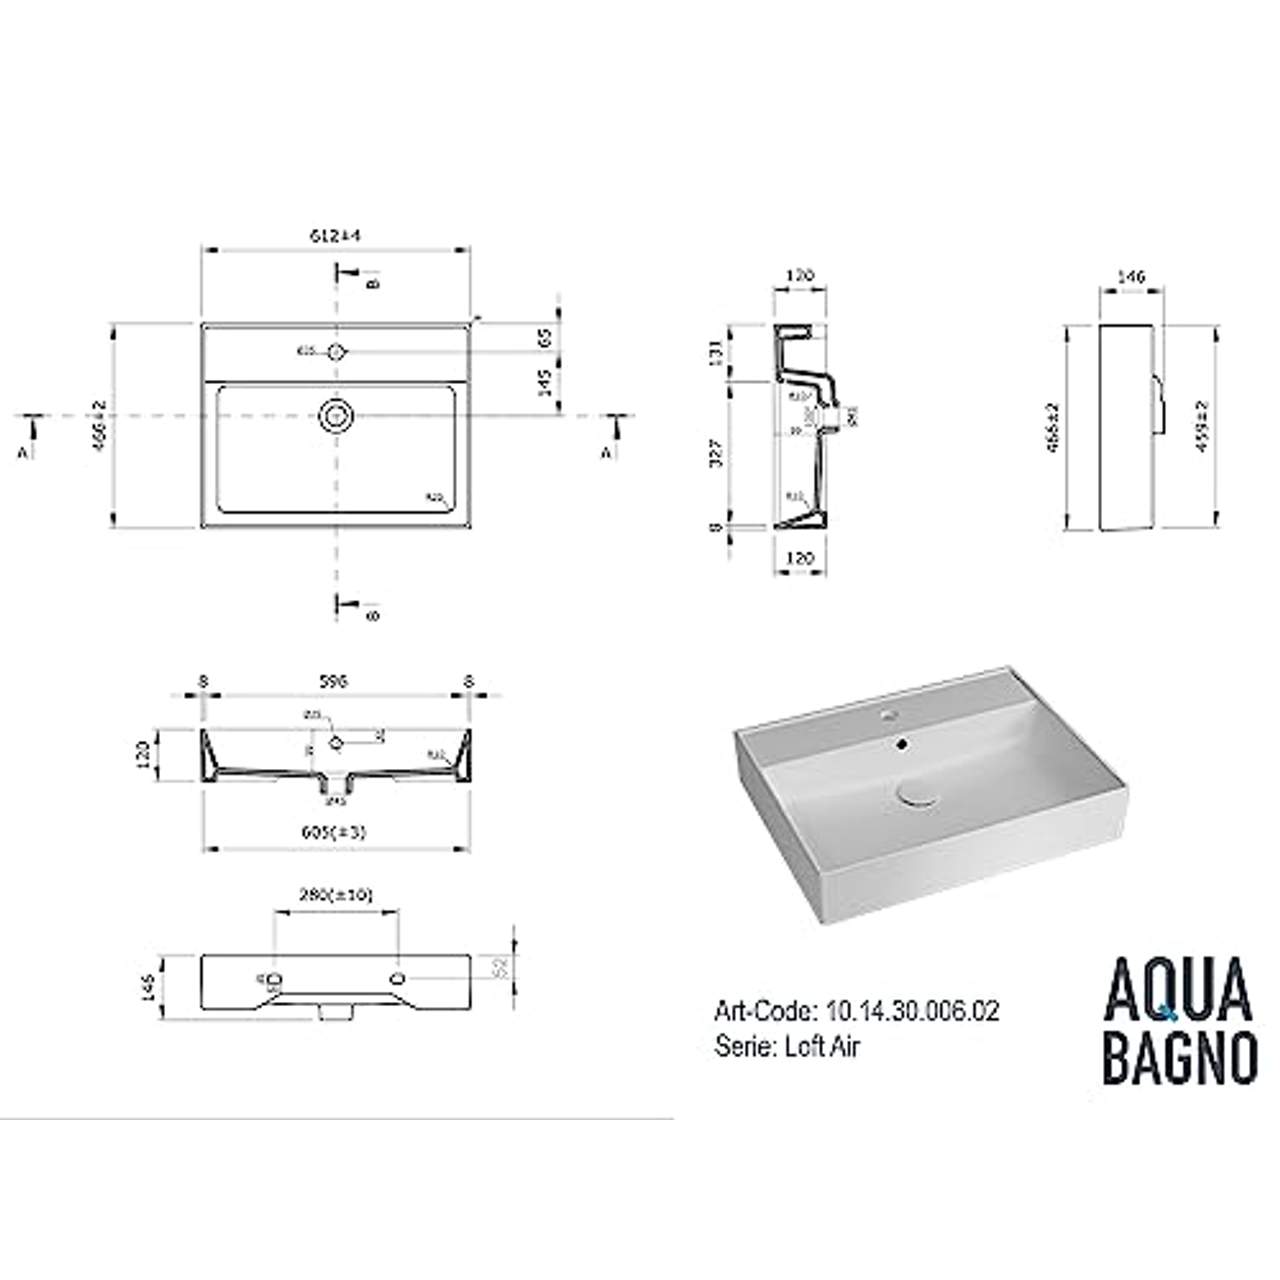 Aqua Bagno Waschbecken 60 im modernen Loft Air Design